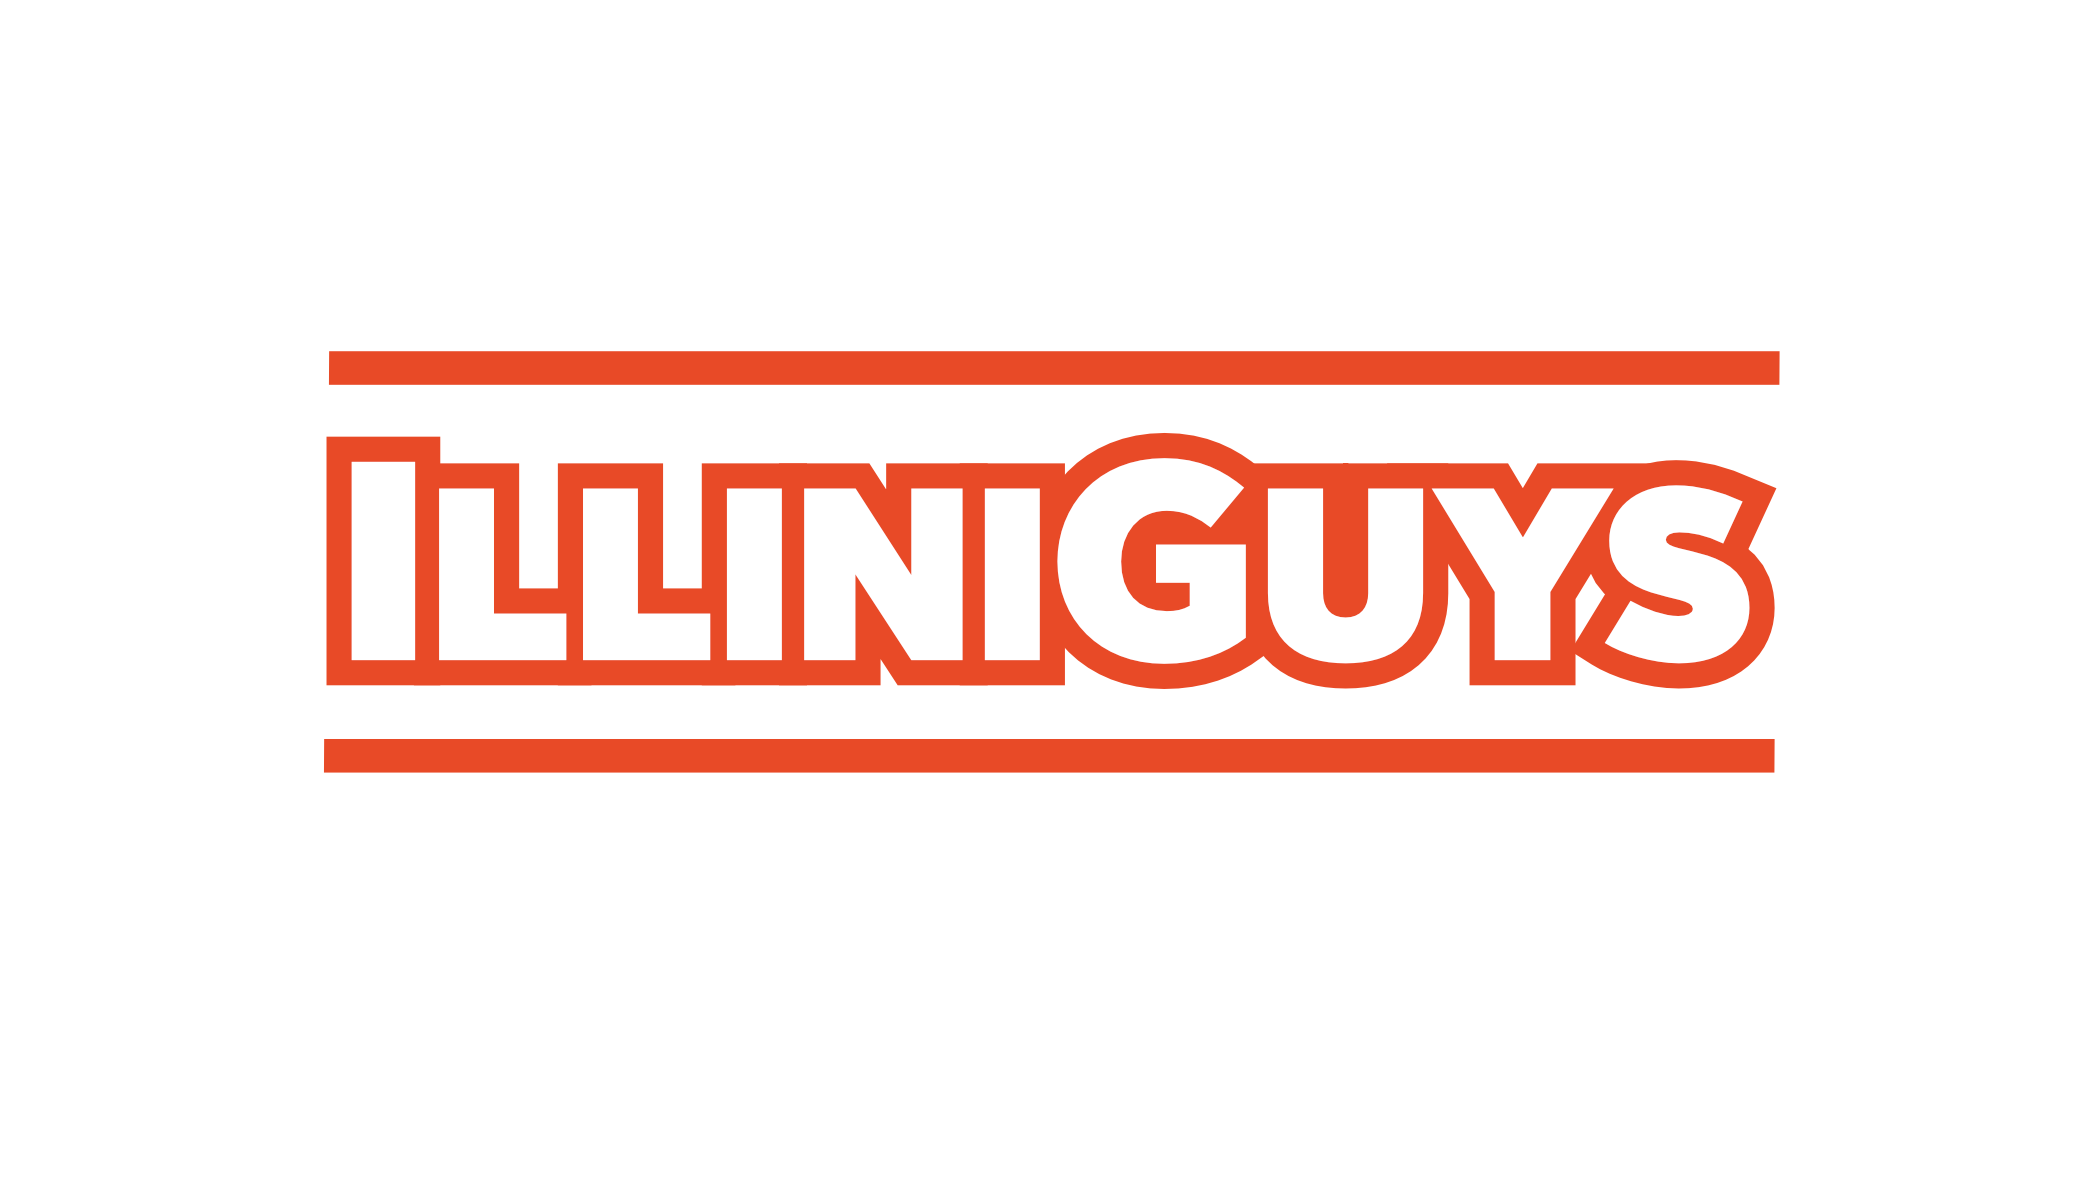 IlliniGuys Website Celebrates 1st Anniversary